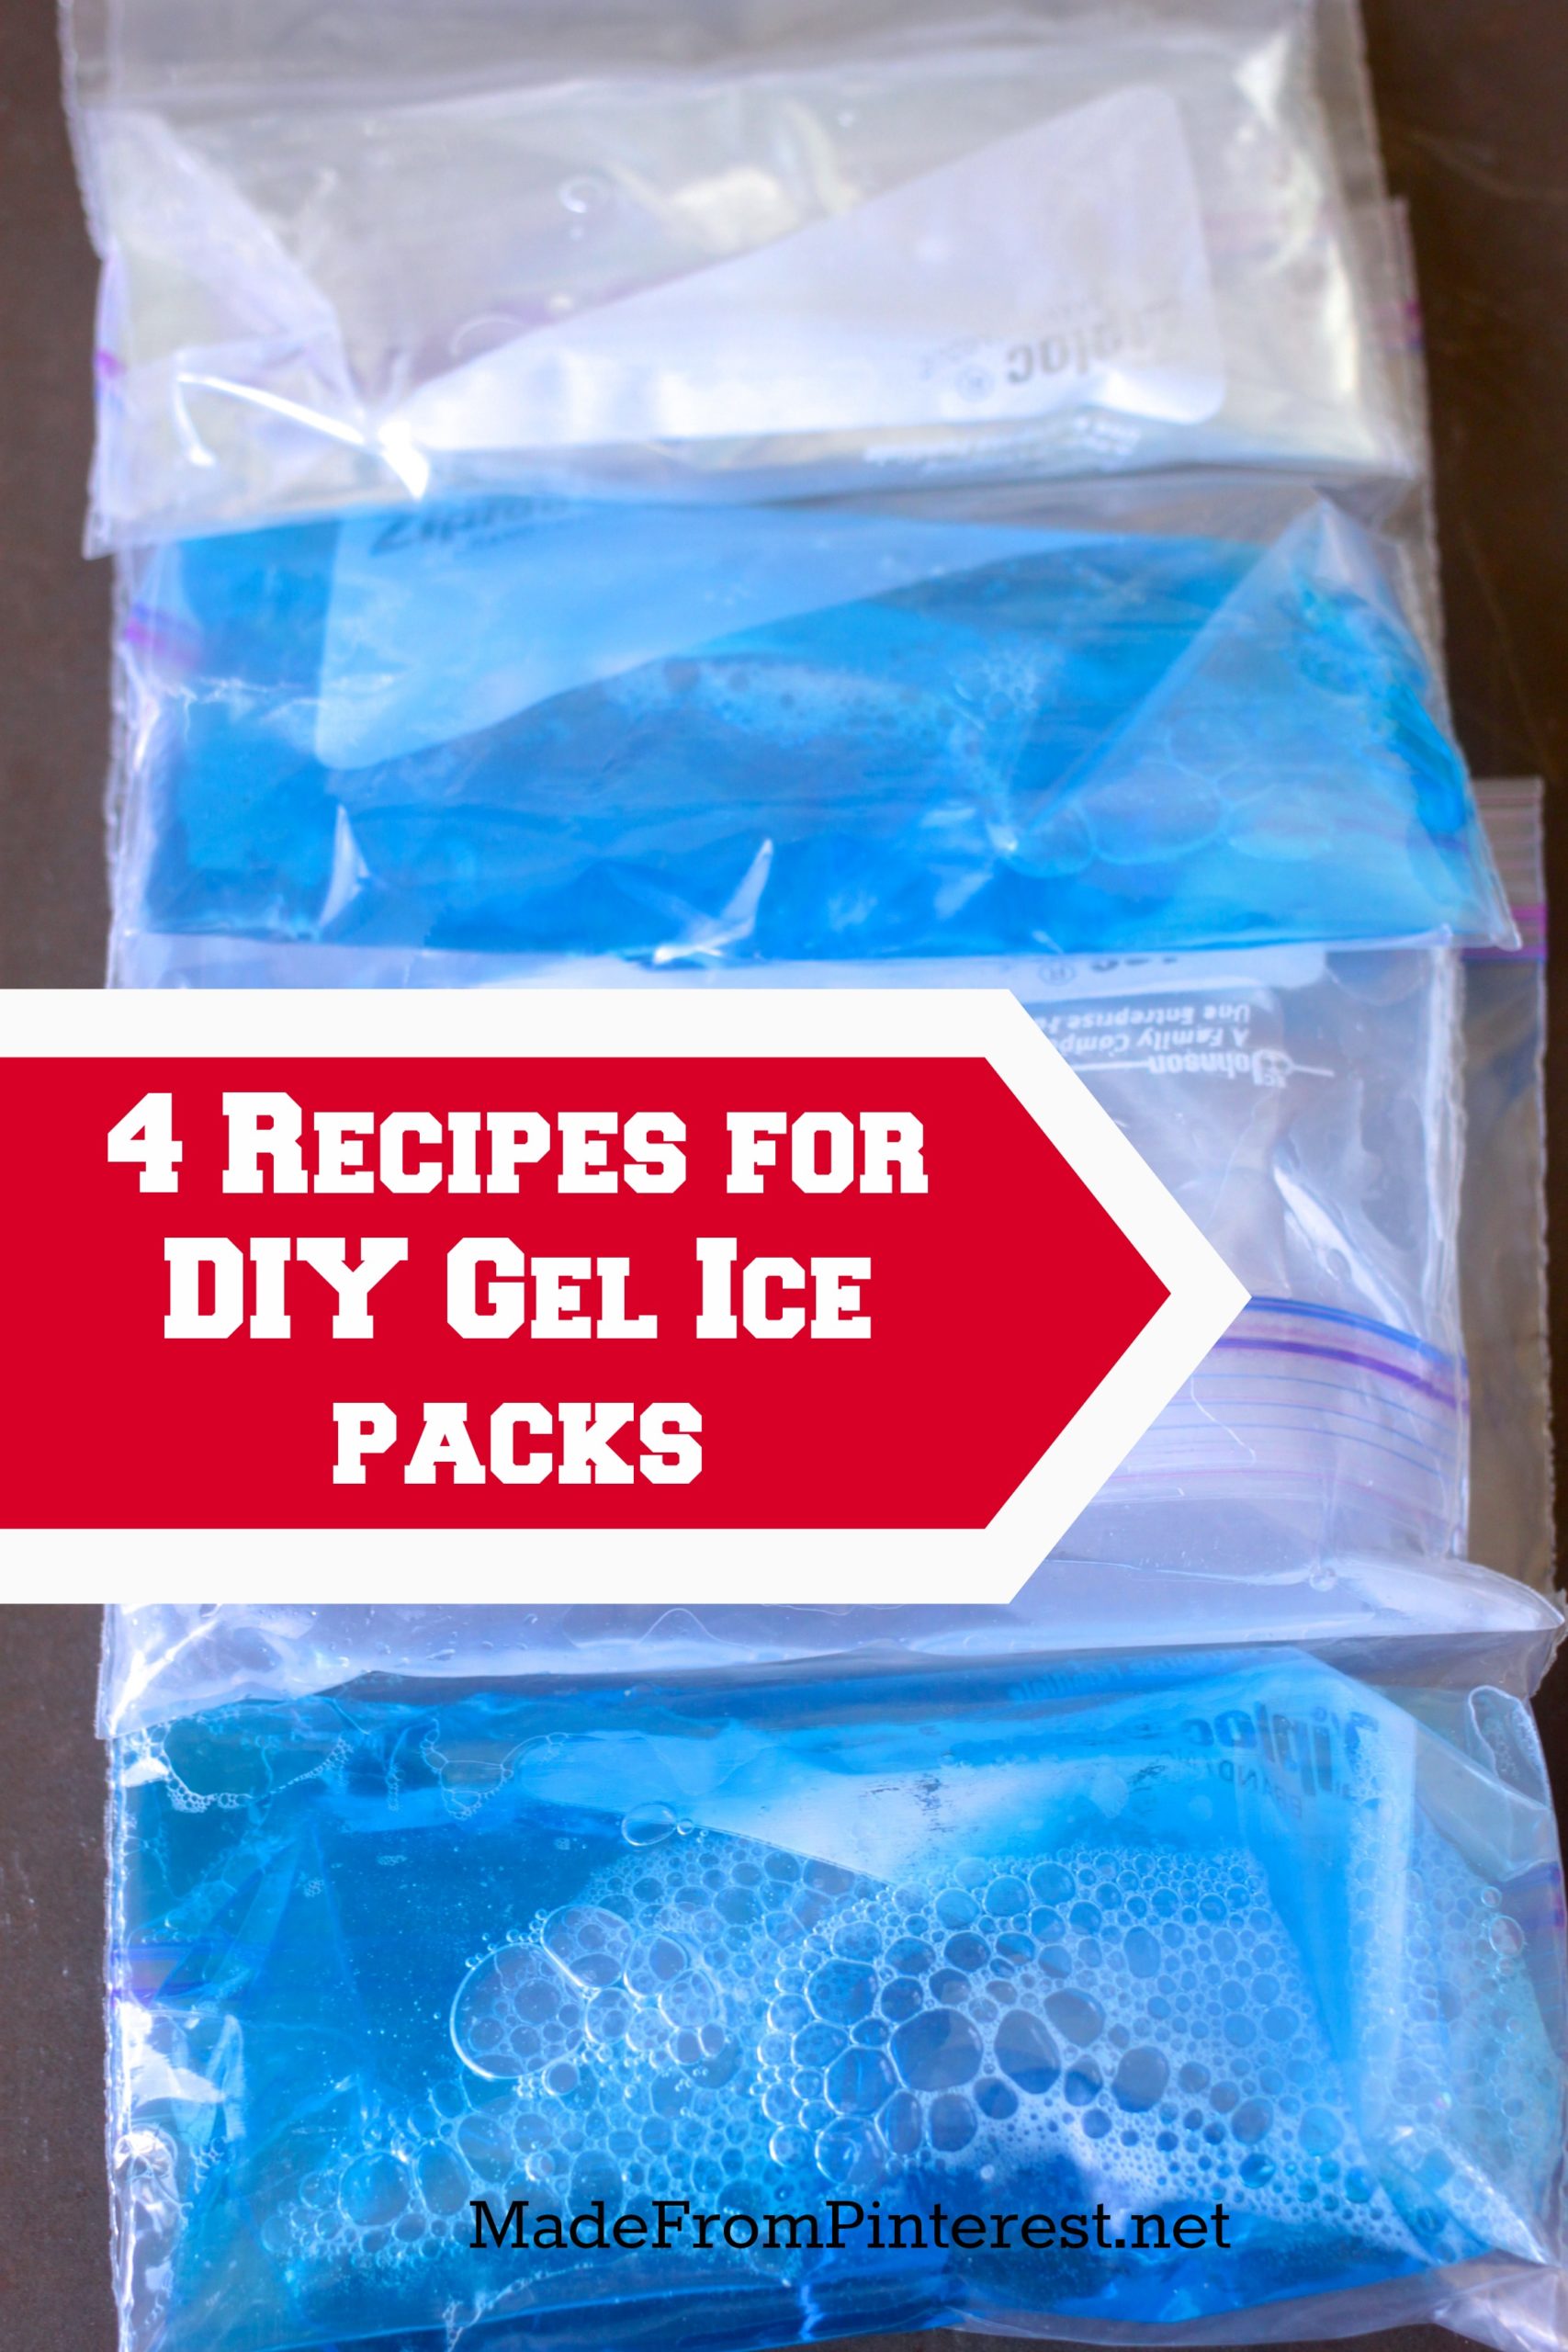 DIY Gel Ice Packs - TGIF - This Grandma is Fun